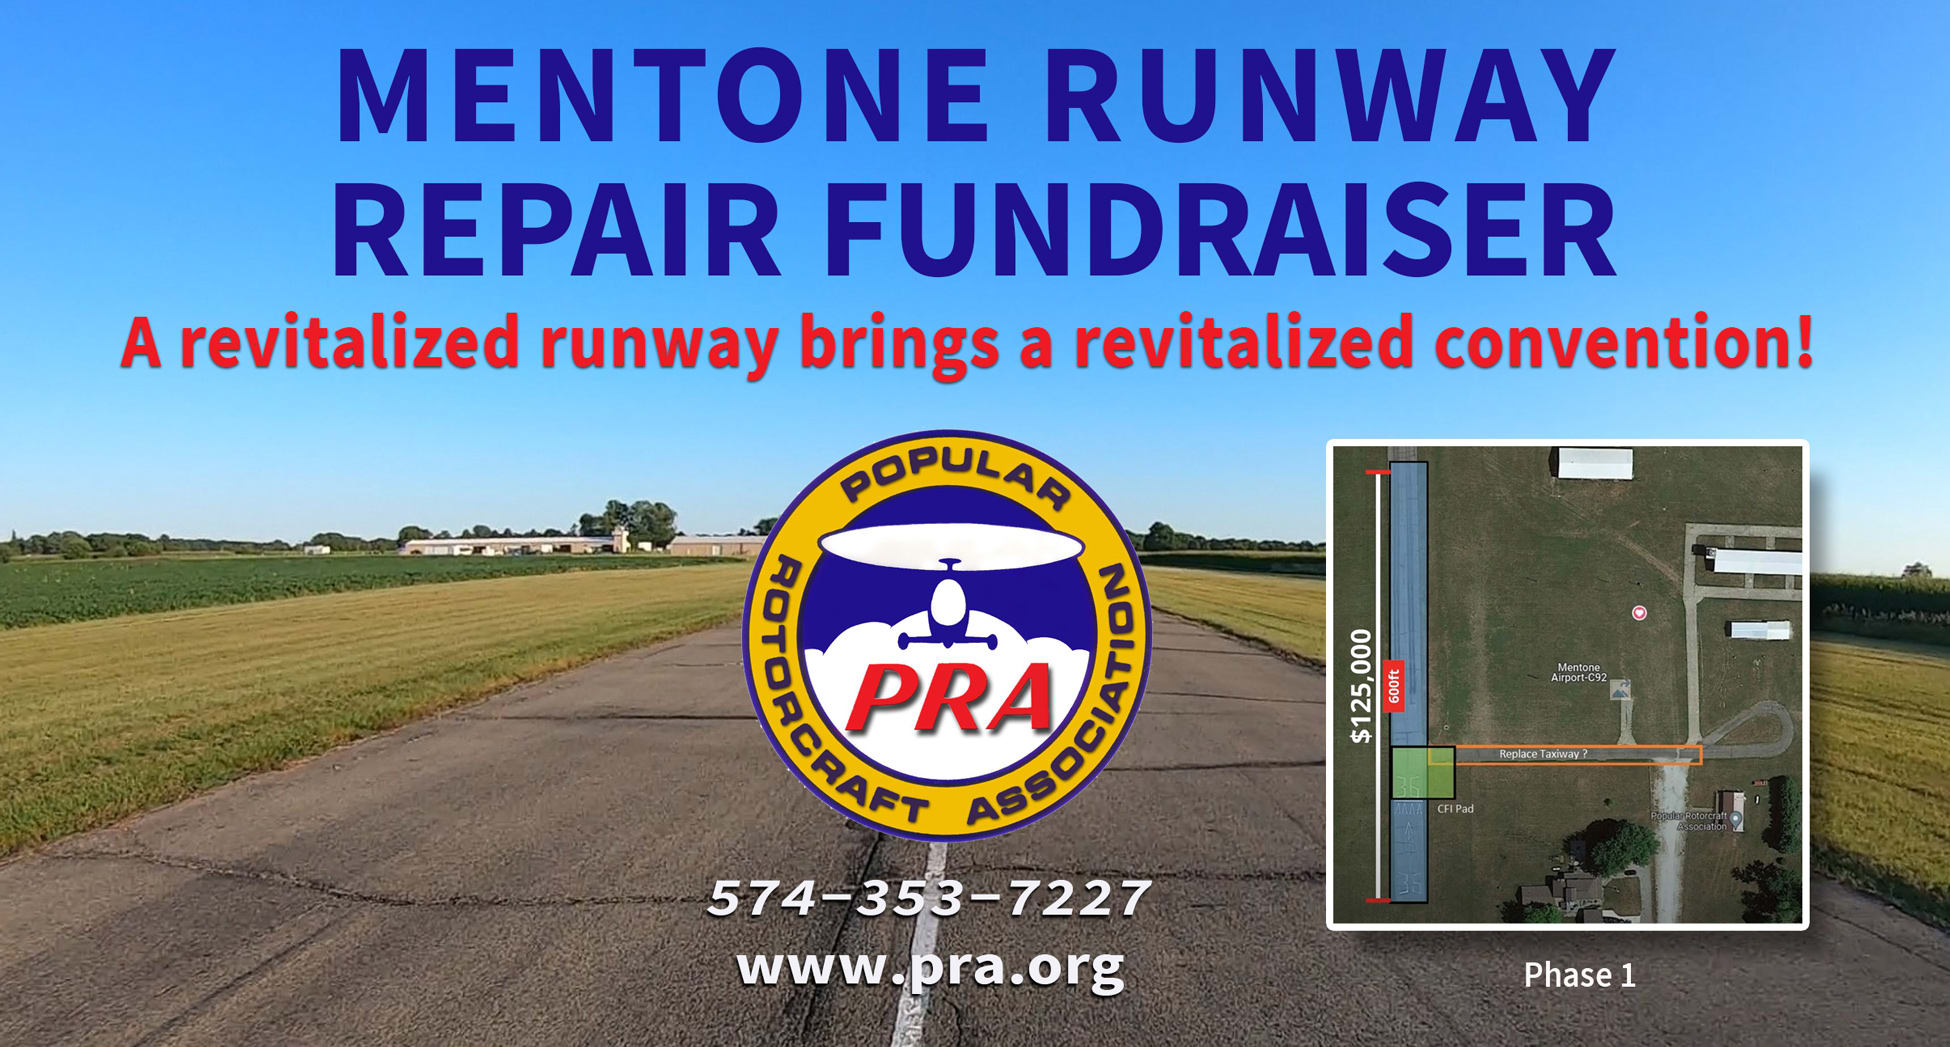 Mentone Runway Repair Fundraiser